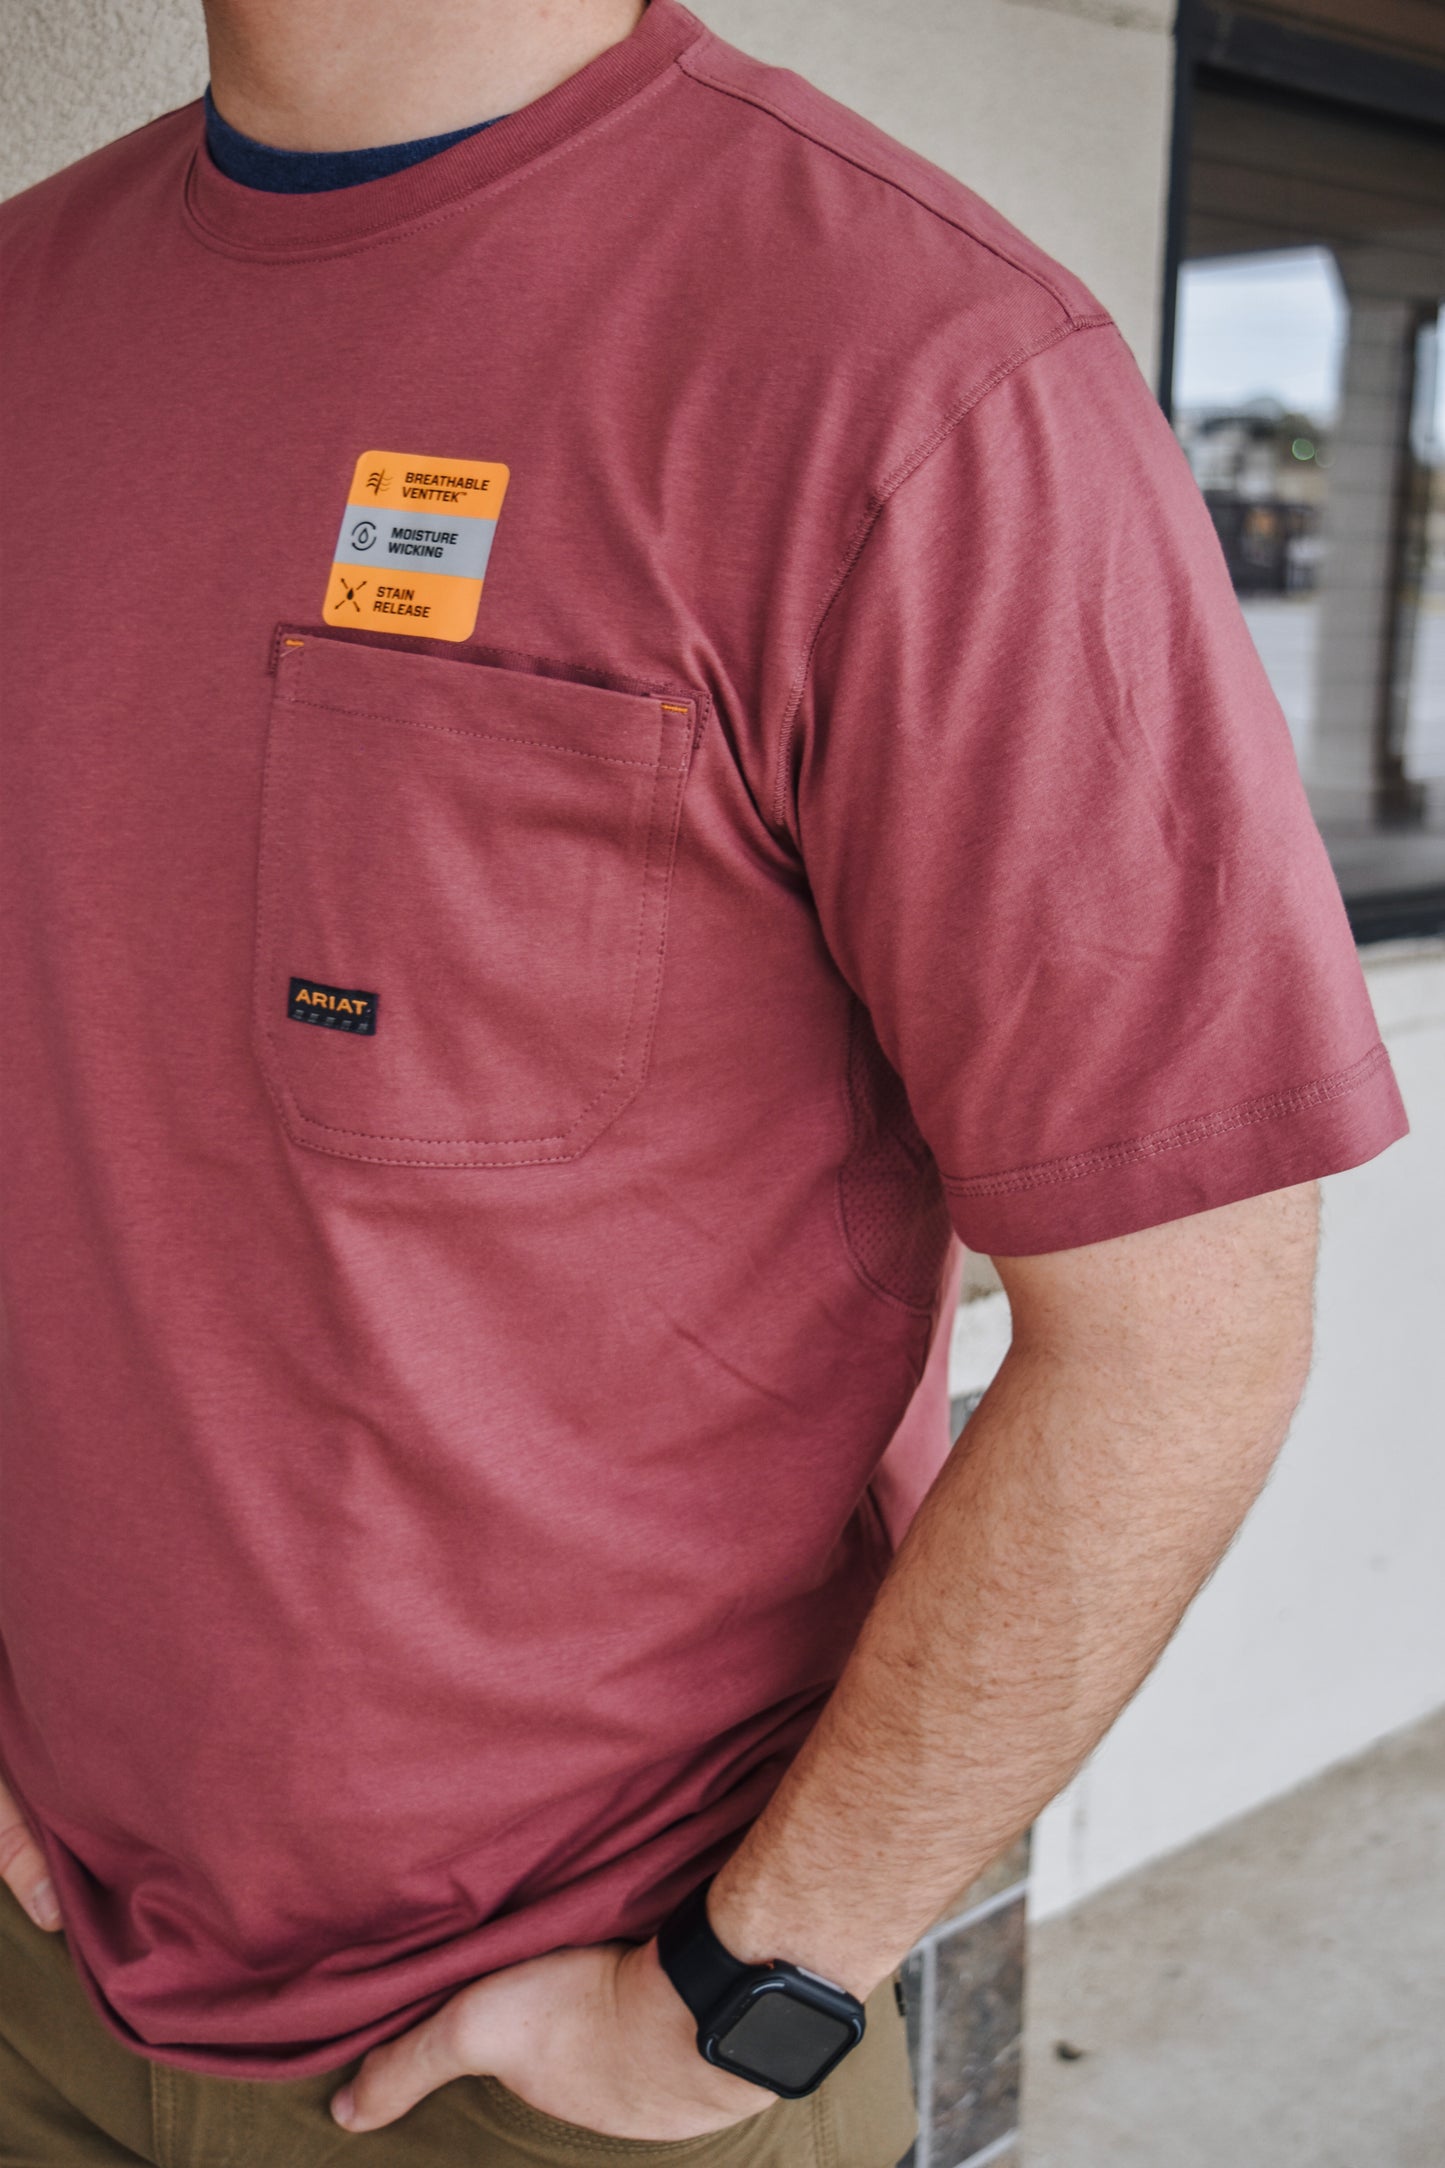 Roan Rogue Rebar Workman Reflective Flag Shirt Ariat